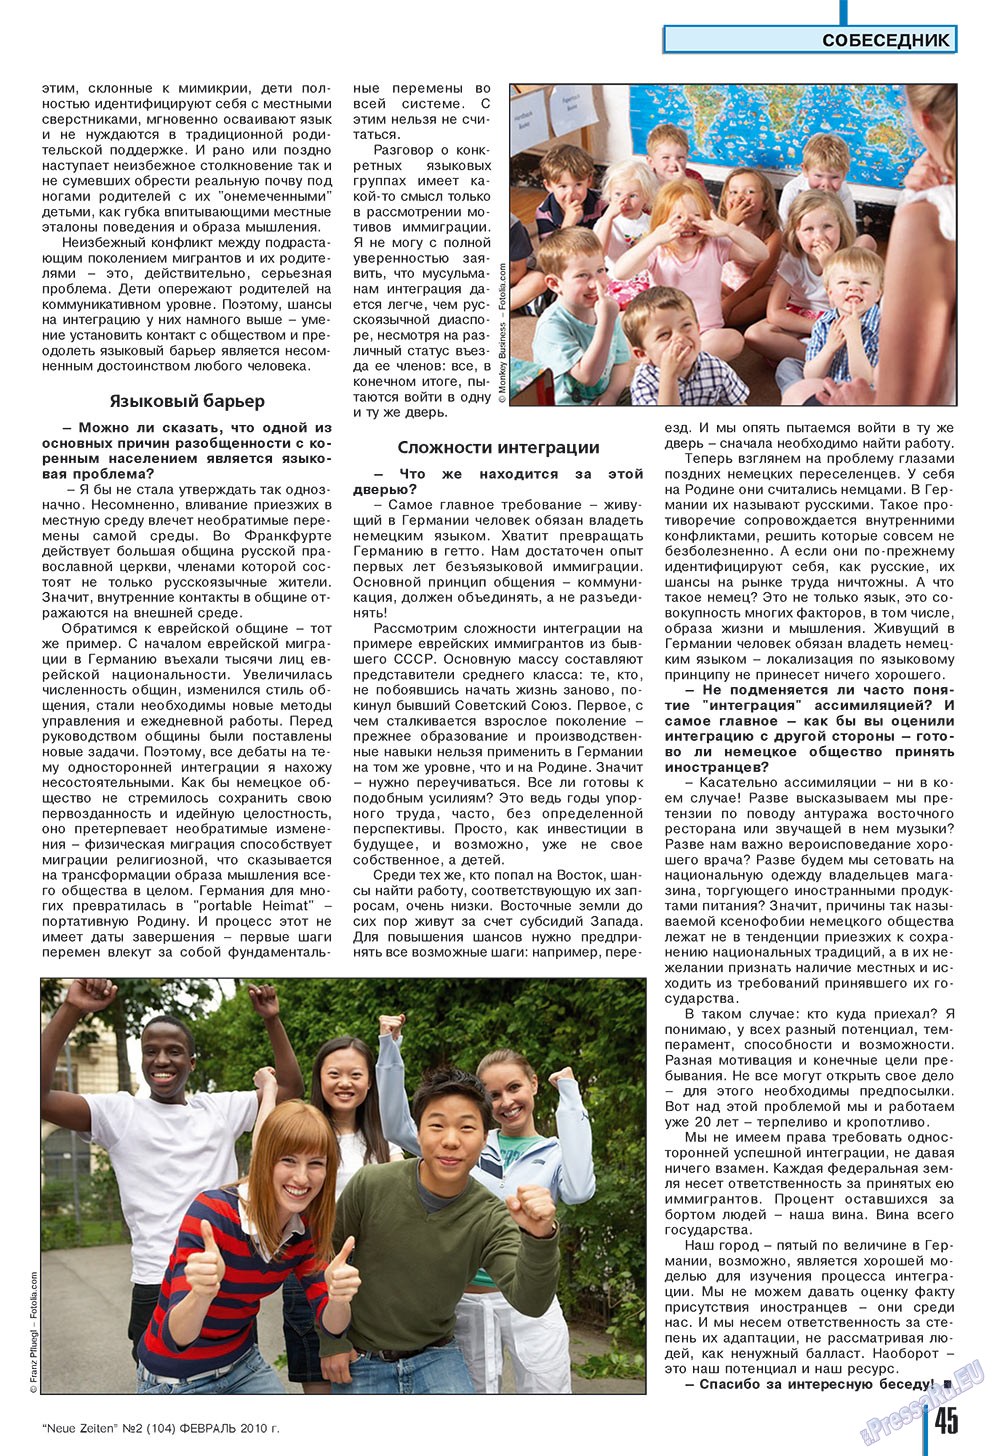 Neue Zeiten (журнал). 2010 год, номер 2, стр. 45